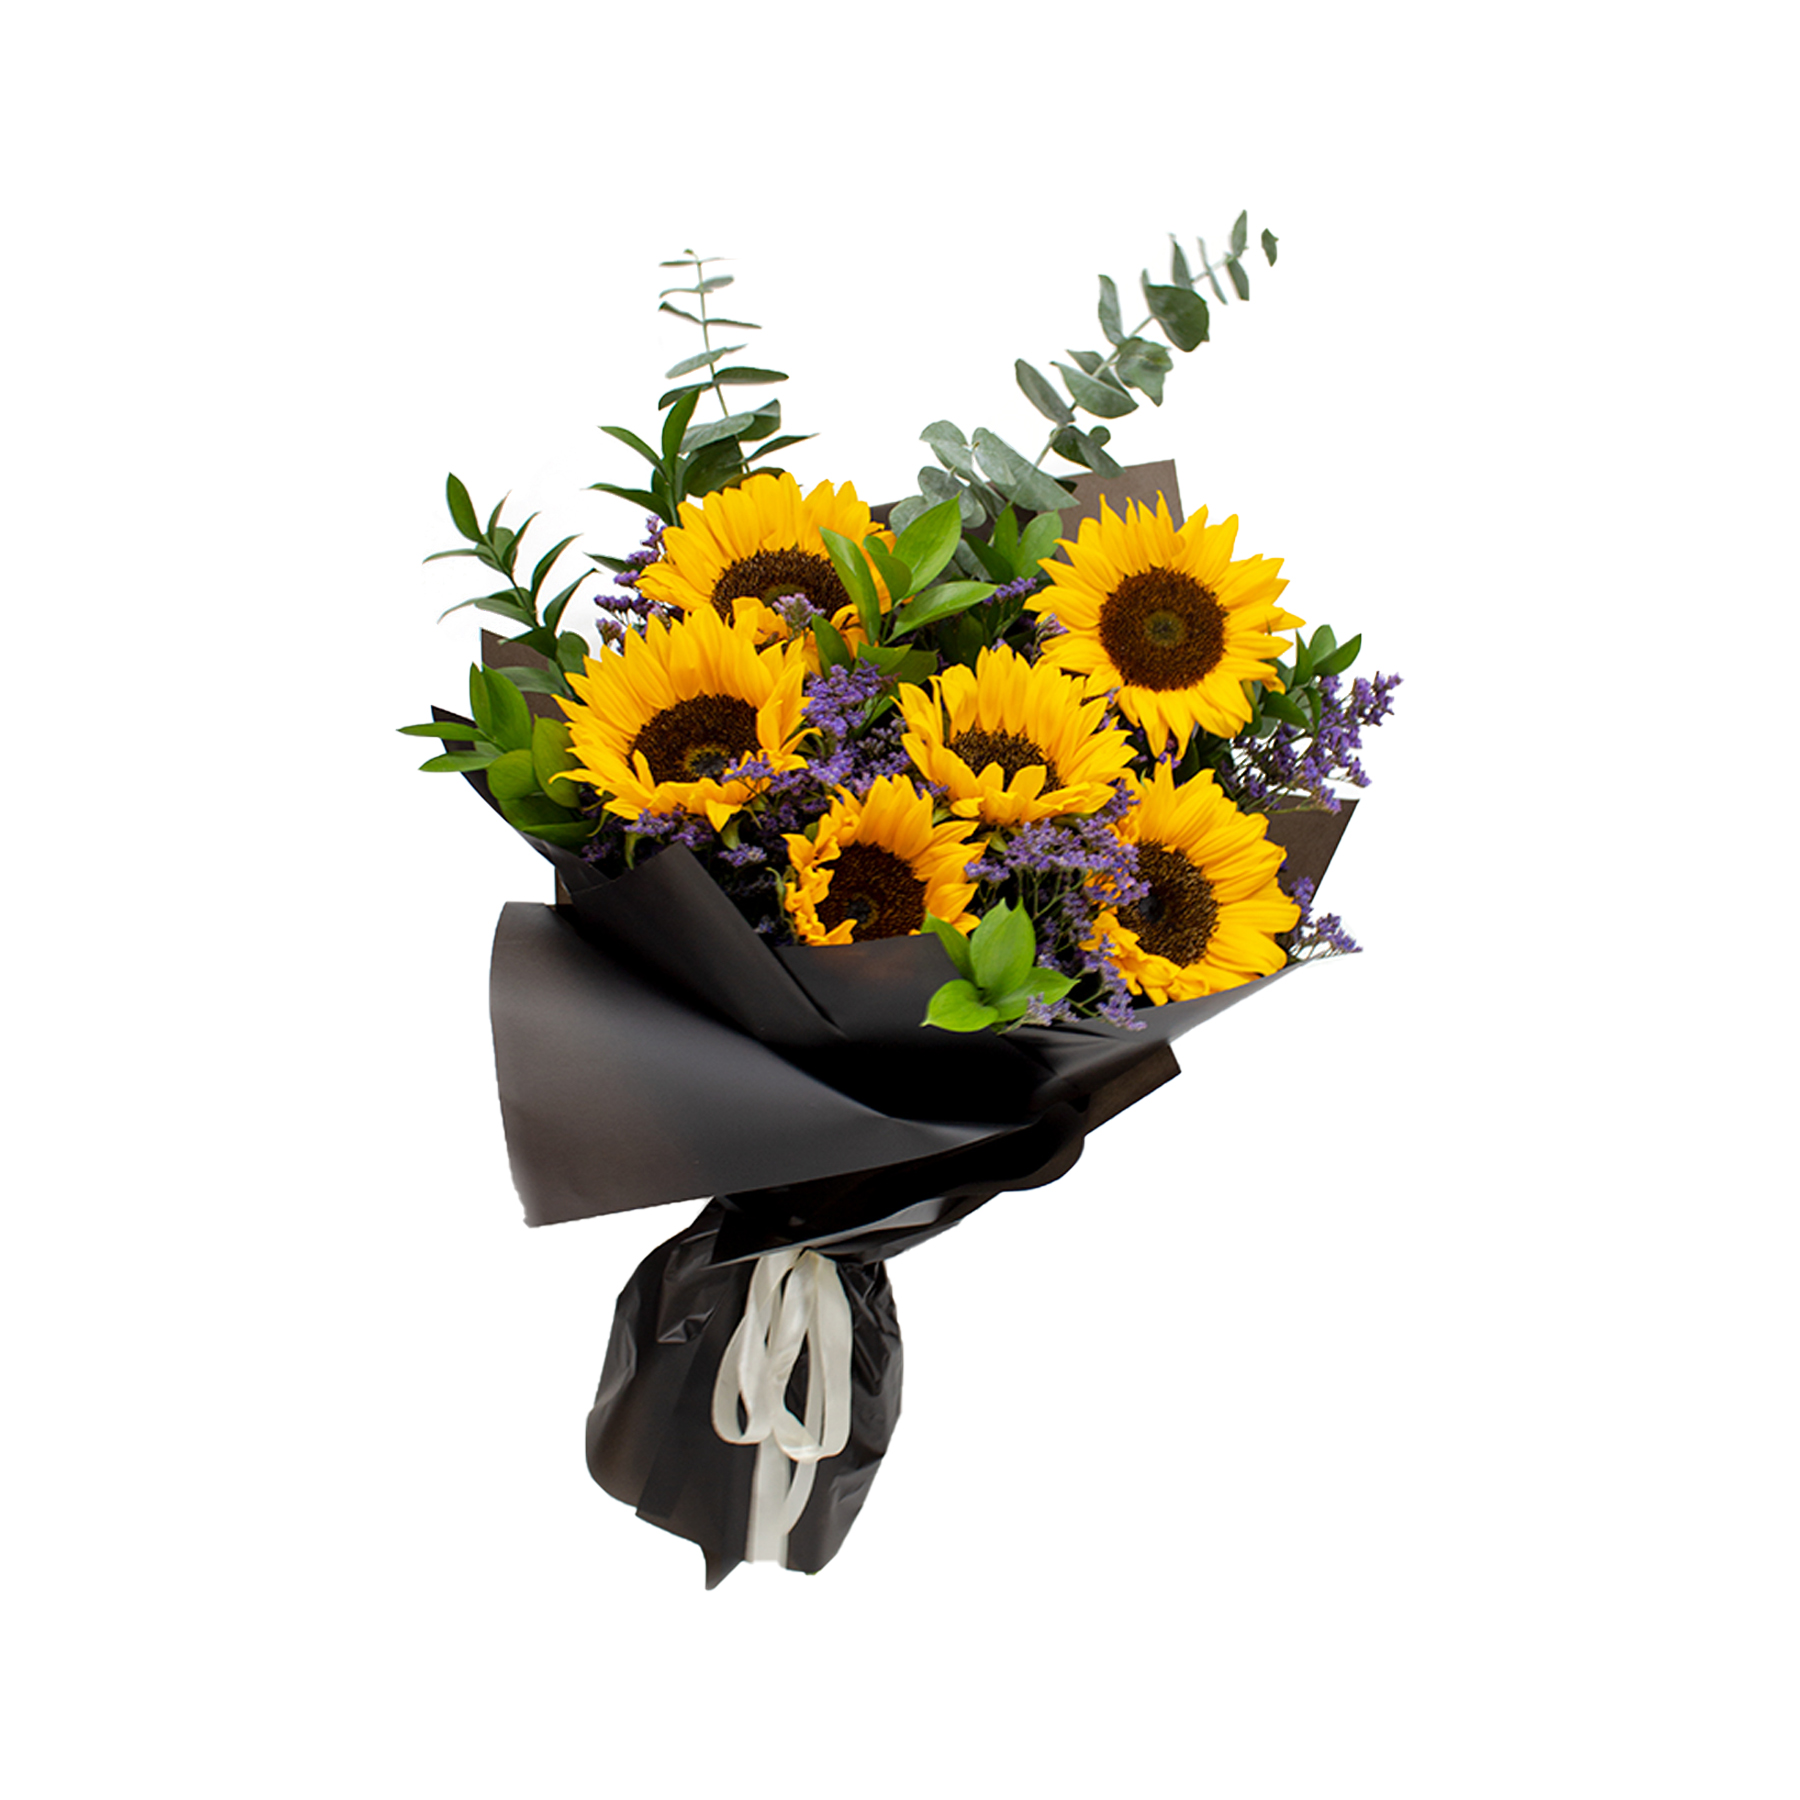 bouquet-of-sun-flowers-with-purple-eccessories2